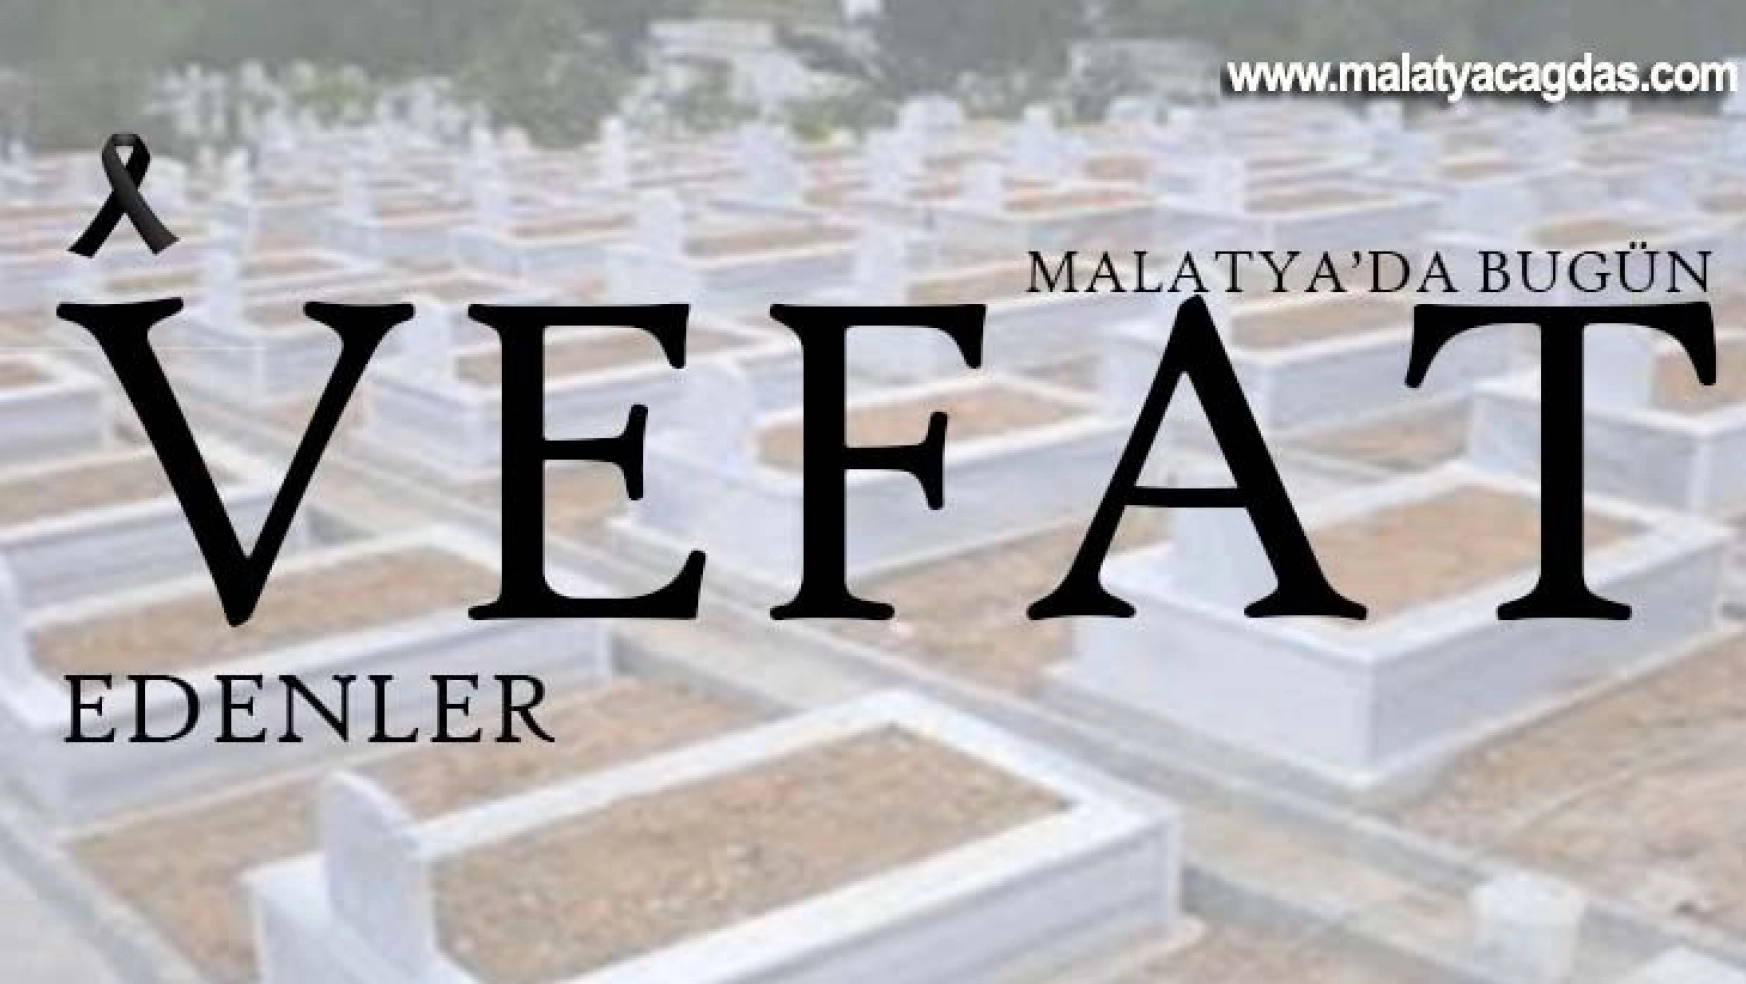 Malatya'da Bugün Vefat Edenler